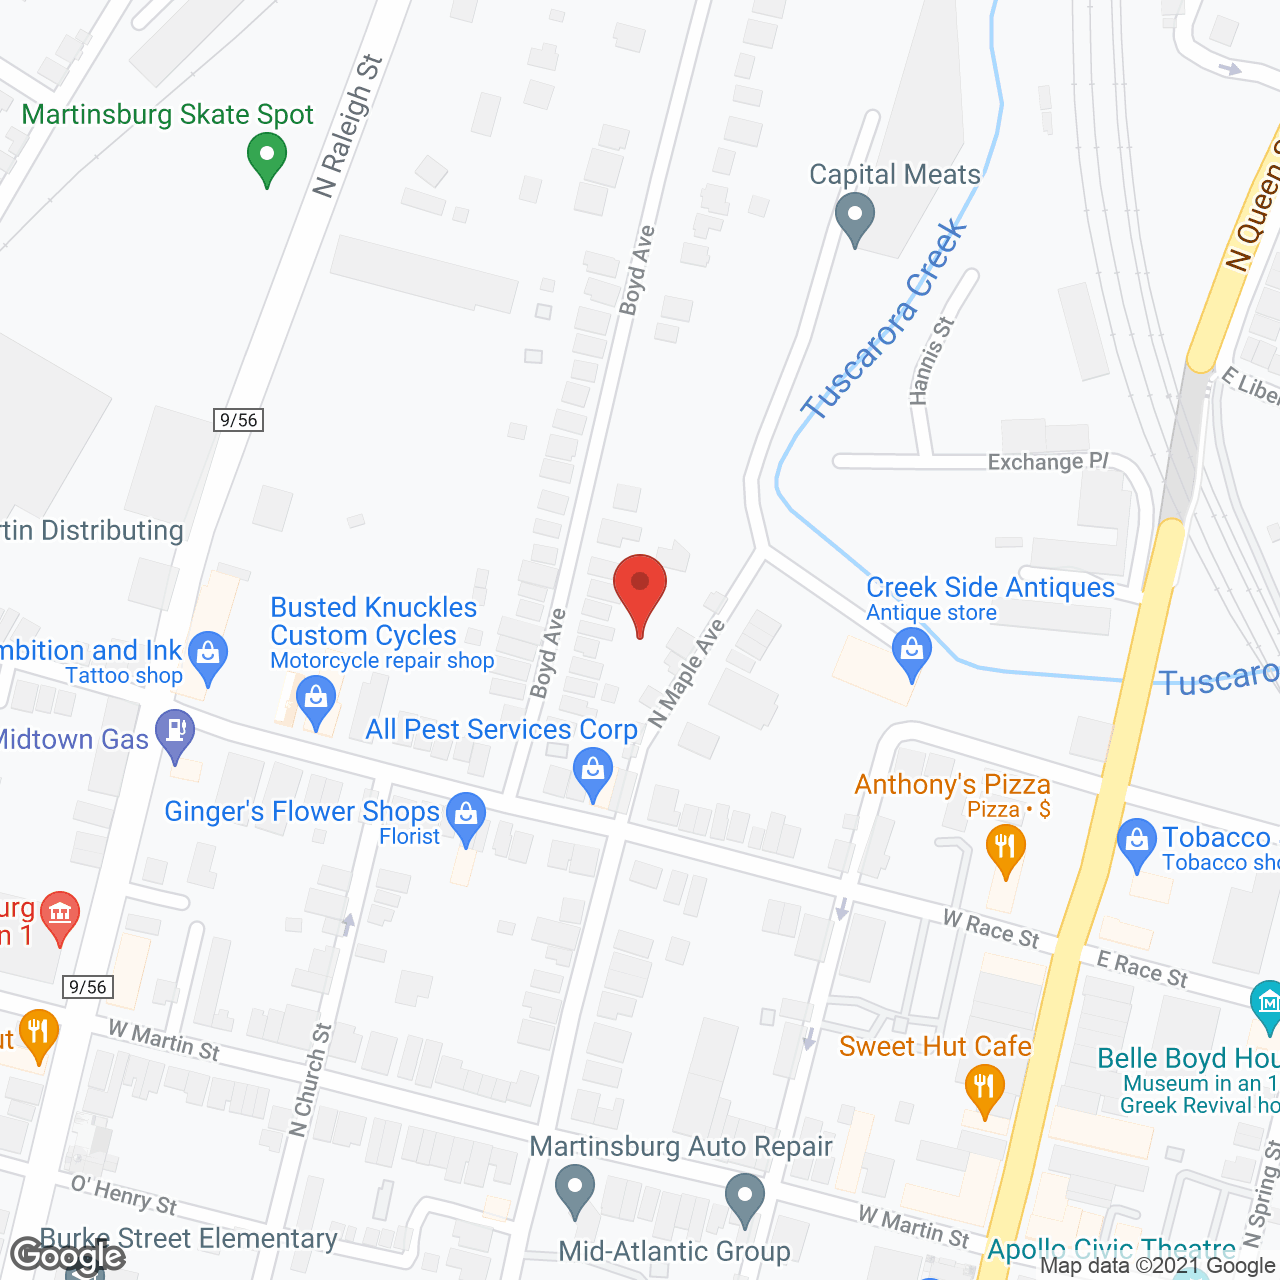 Harmony at Martinsburg in google map